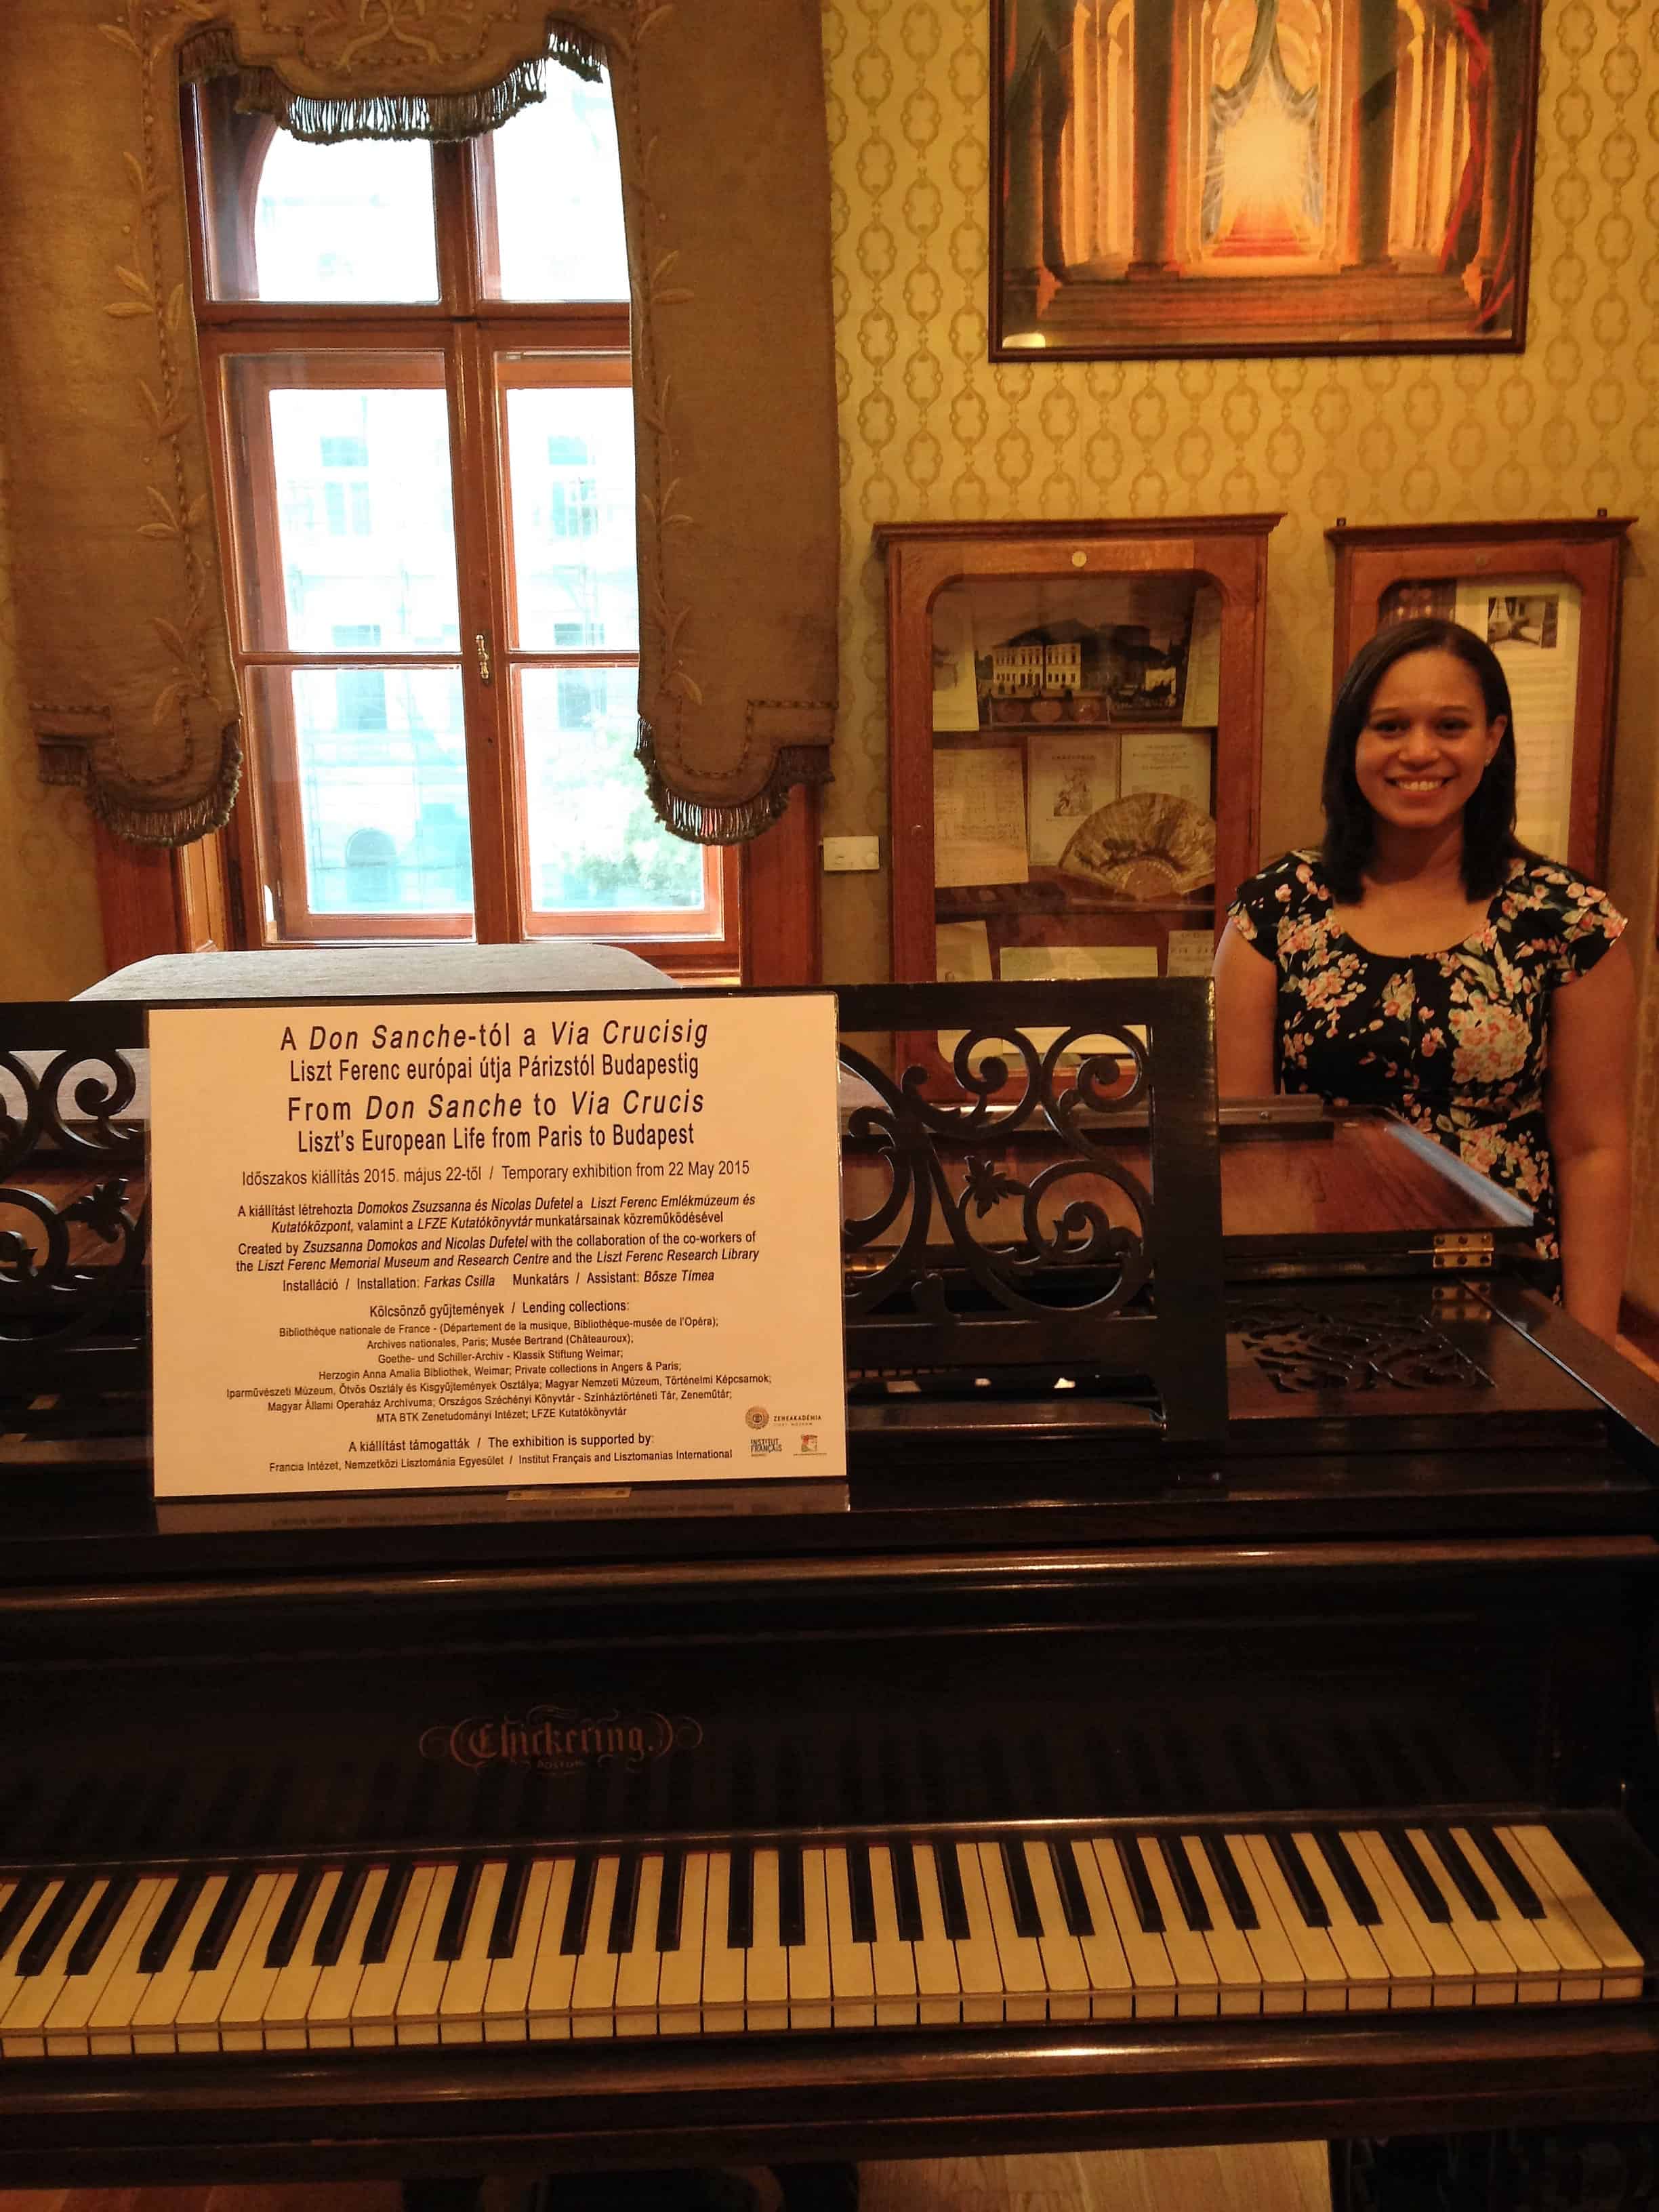 Piano exposto no Museu de Liszt